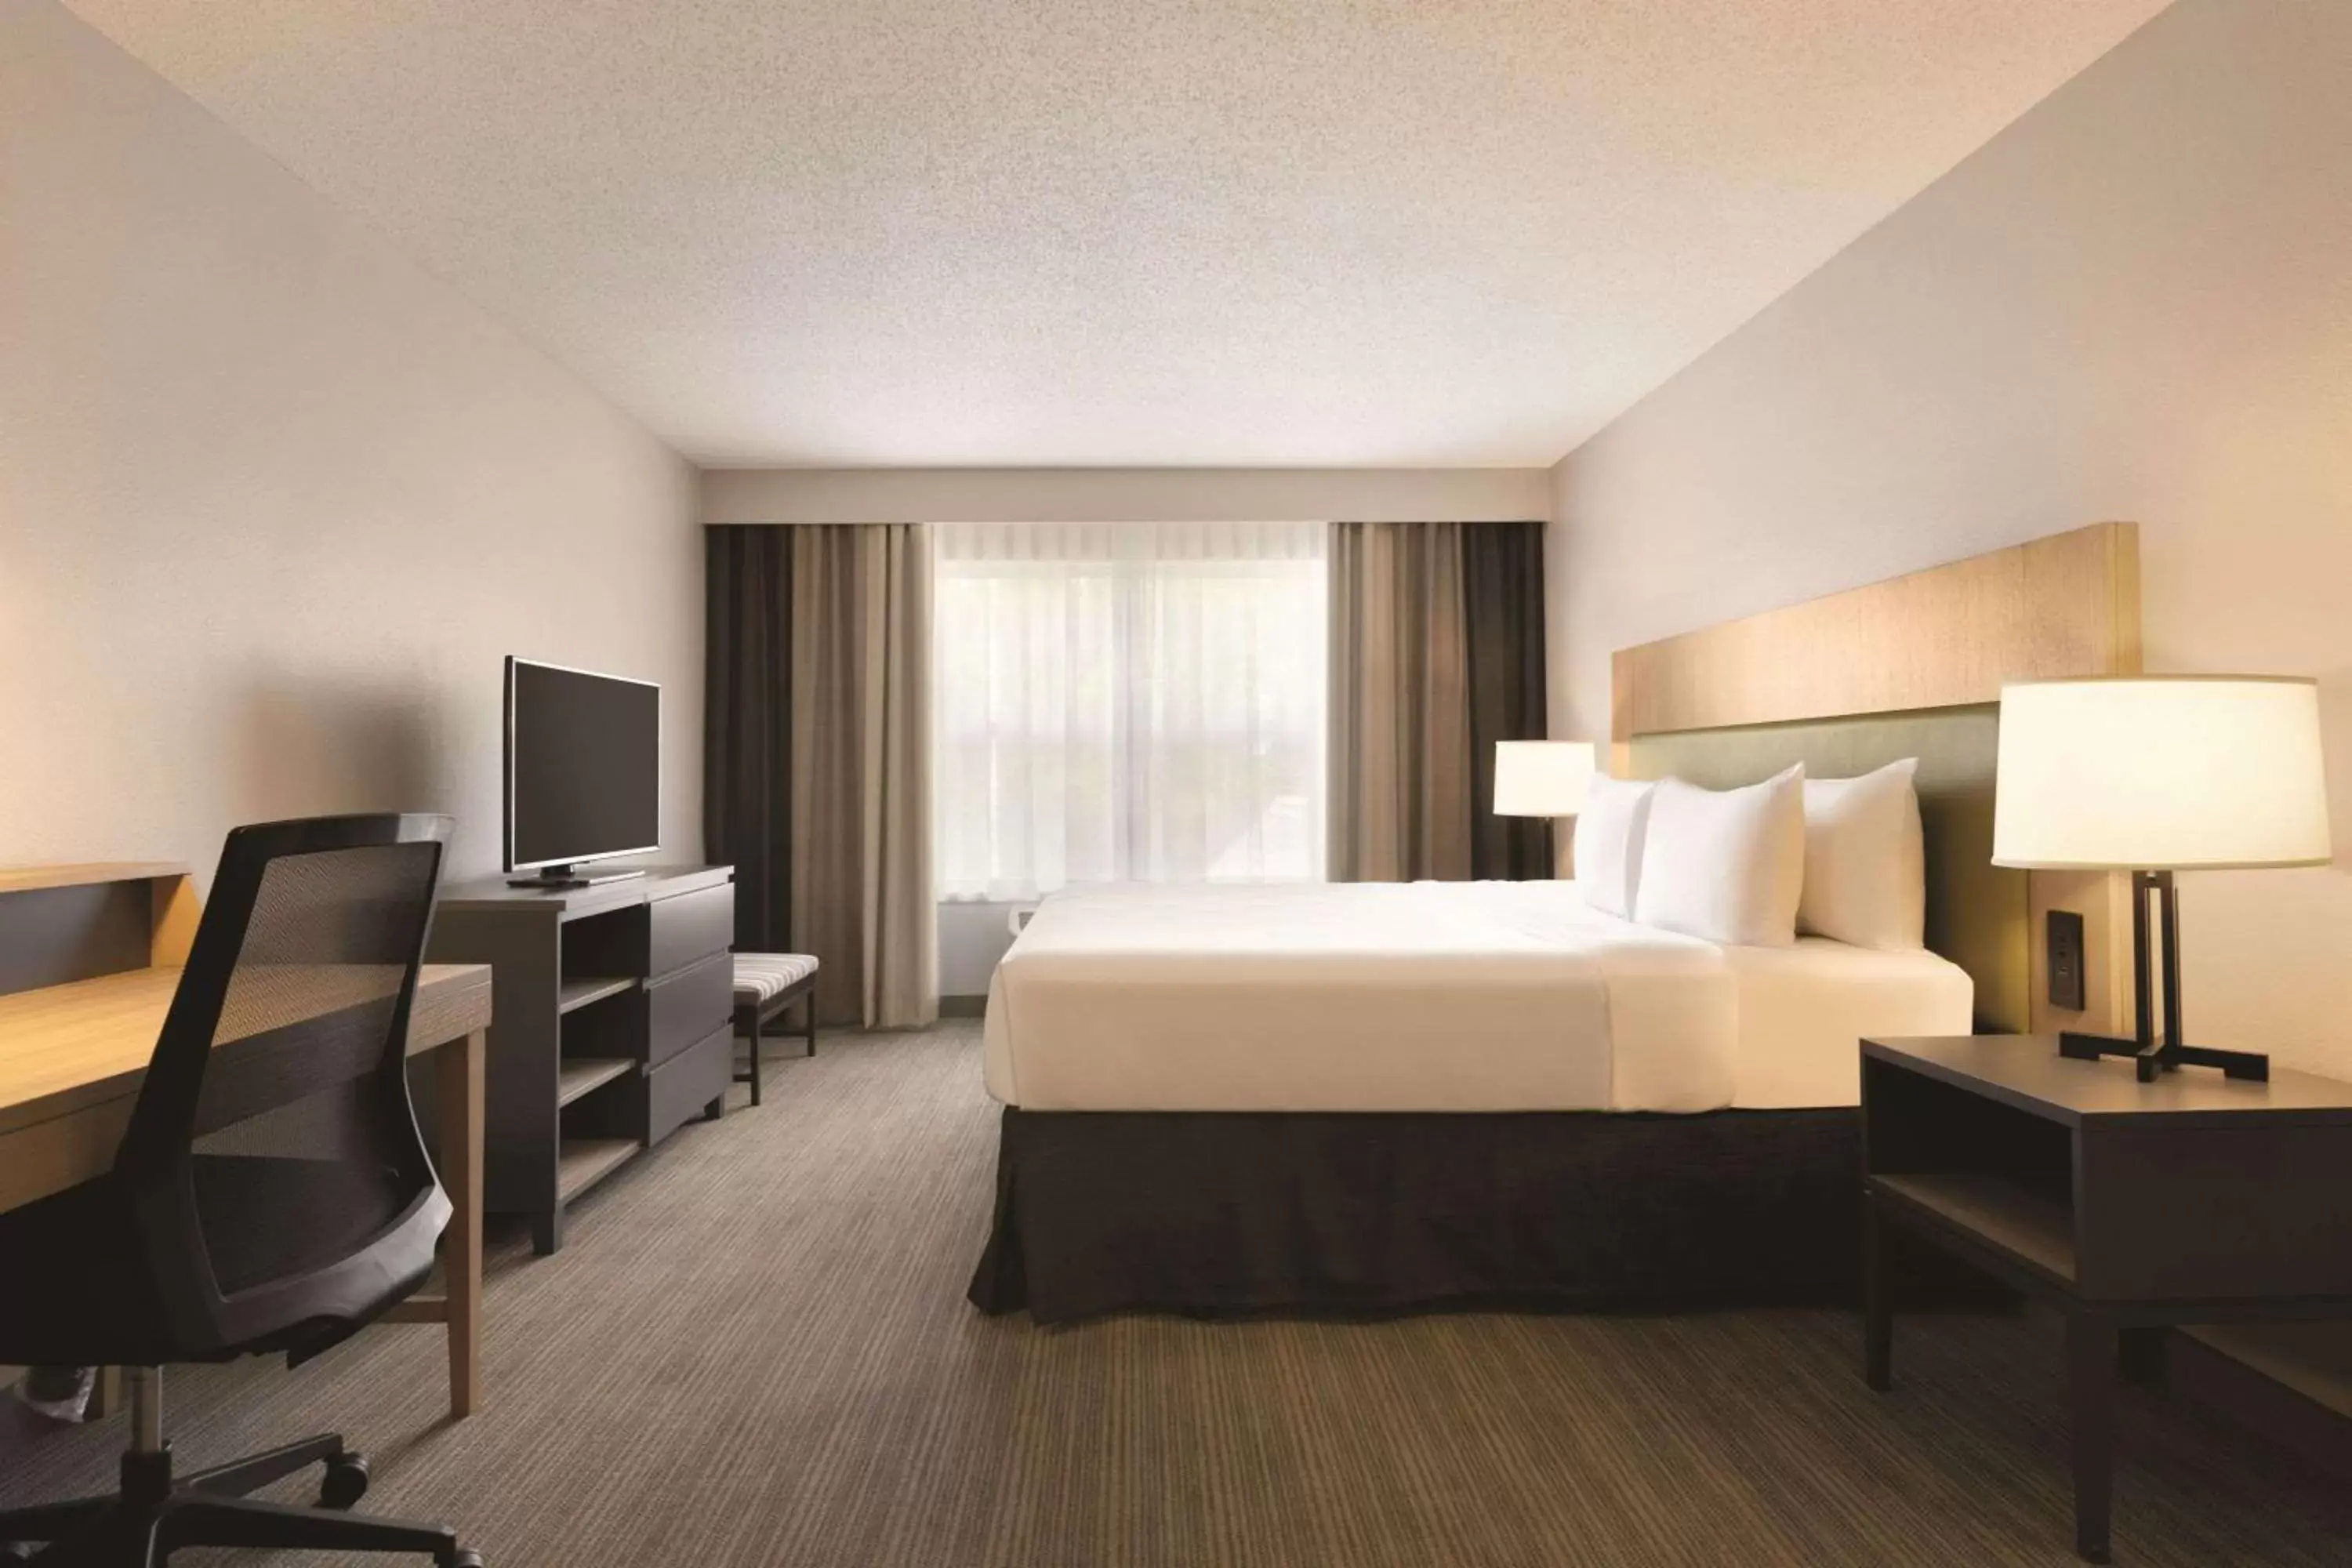 Bedroom in Country Inn & Suites by Radisson, Atlanta Airport South, GA